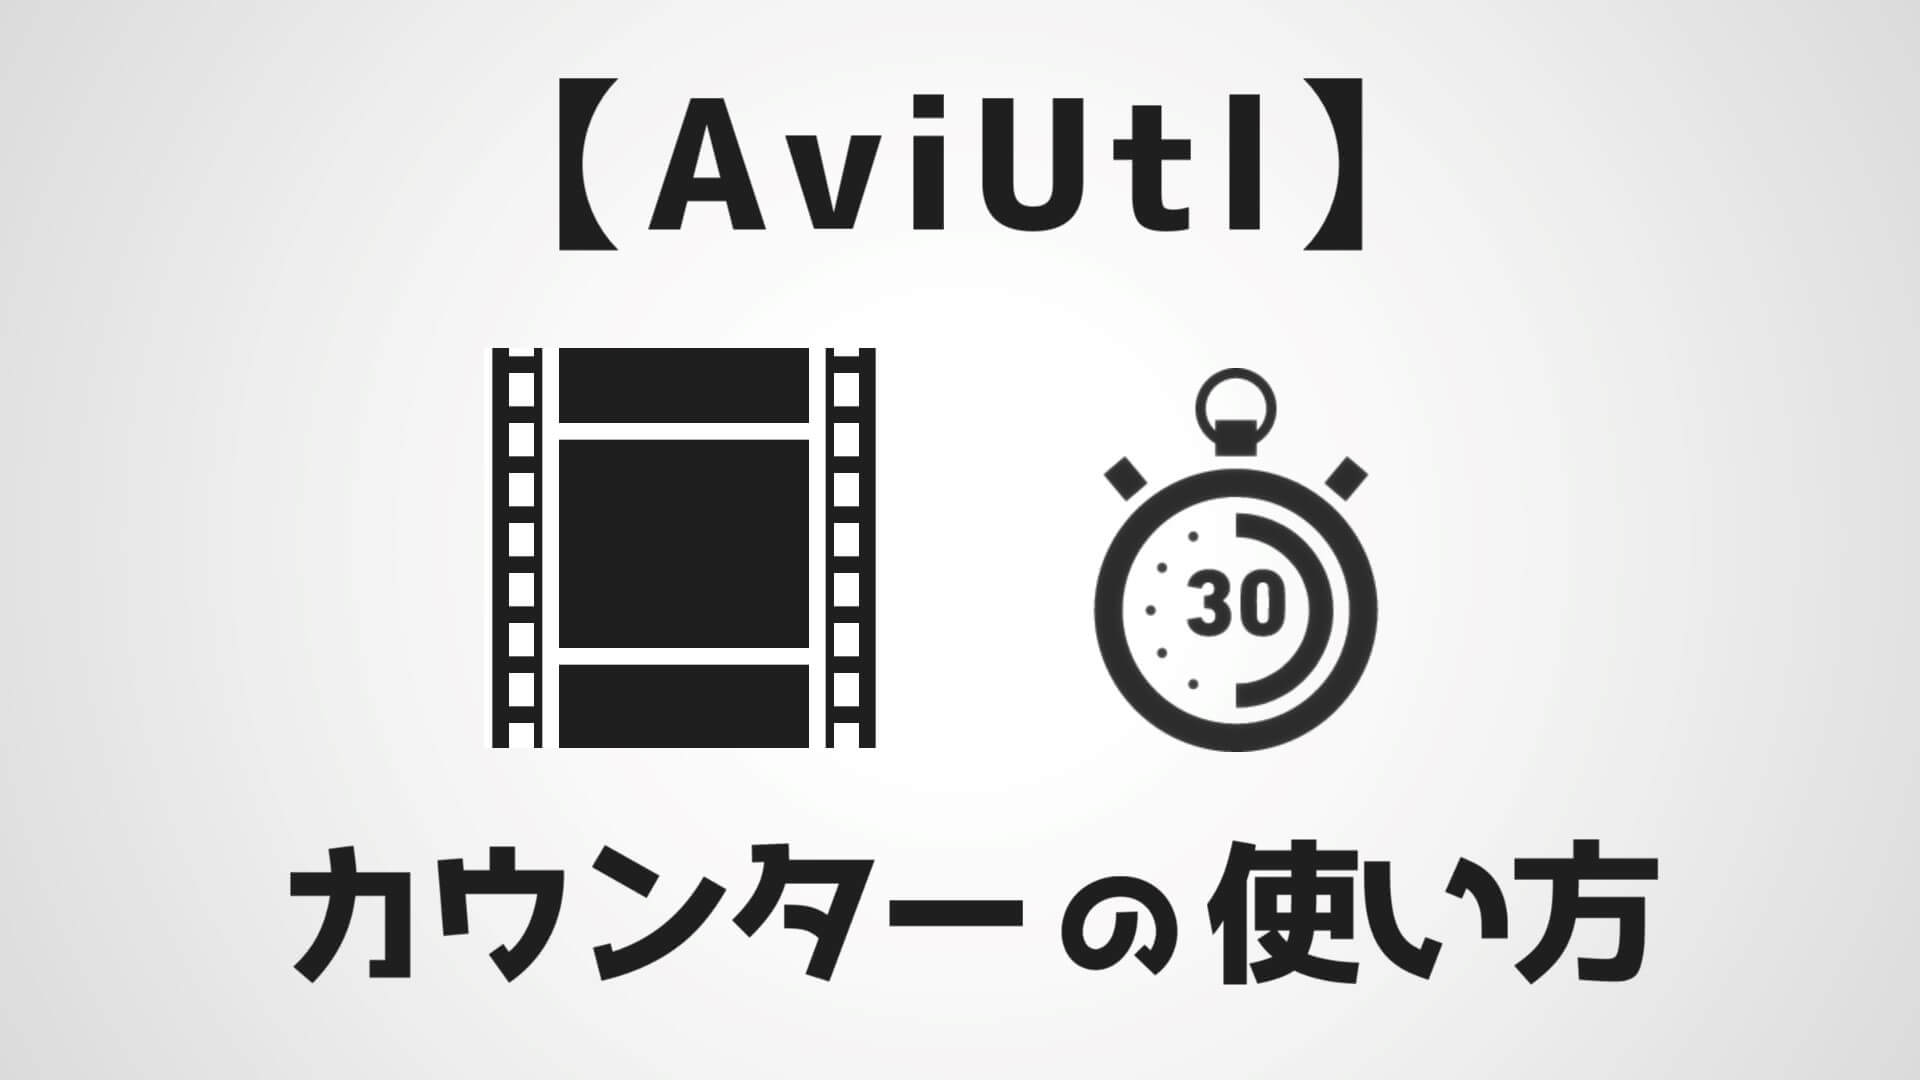 Aviutl タイマー カウンター の使い方 再生 停止 一時停止をわかりやすく解説 Aketama Official Blog